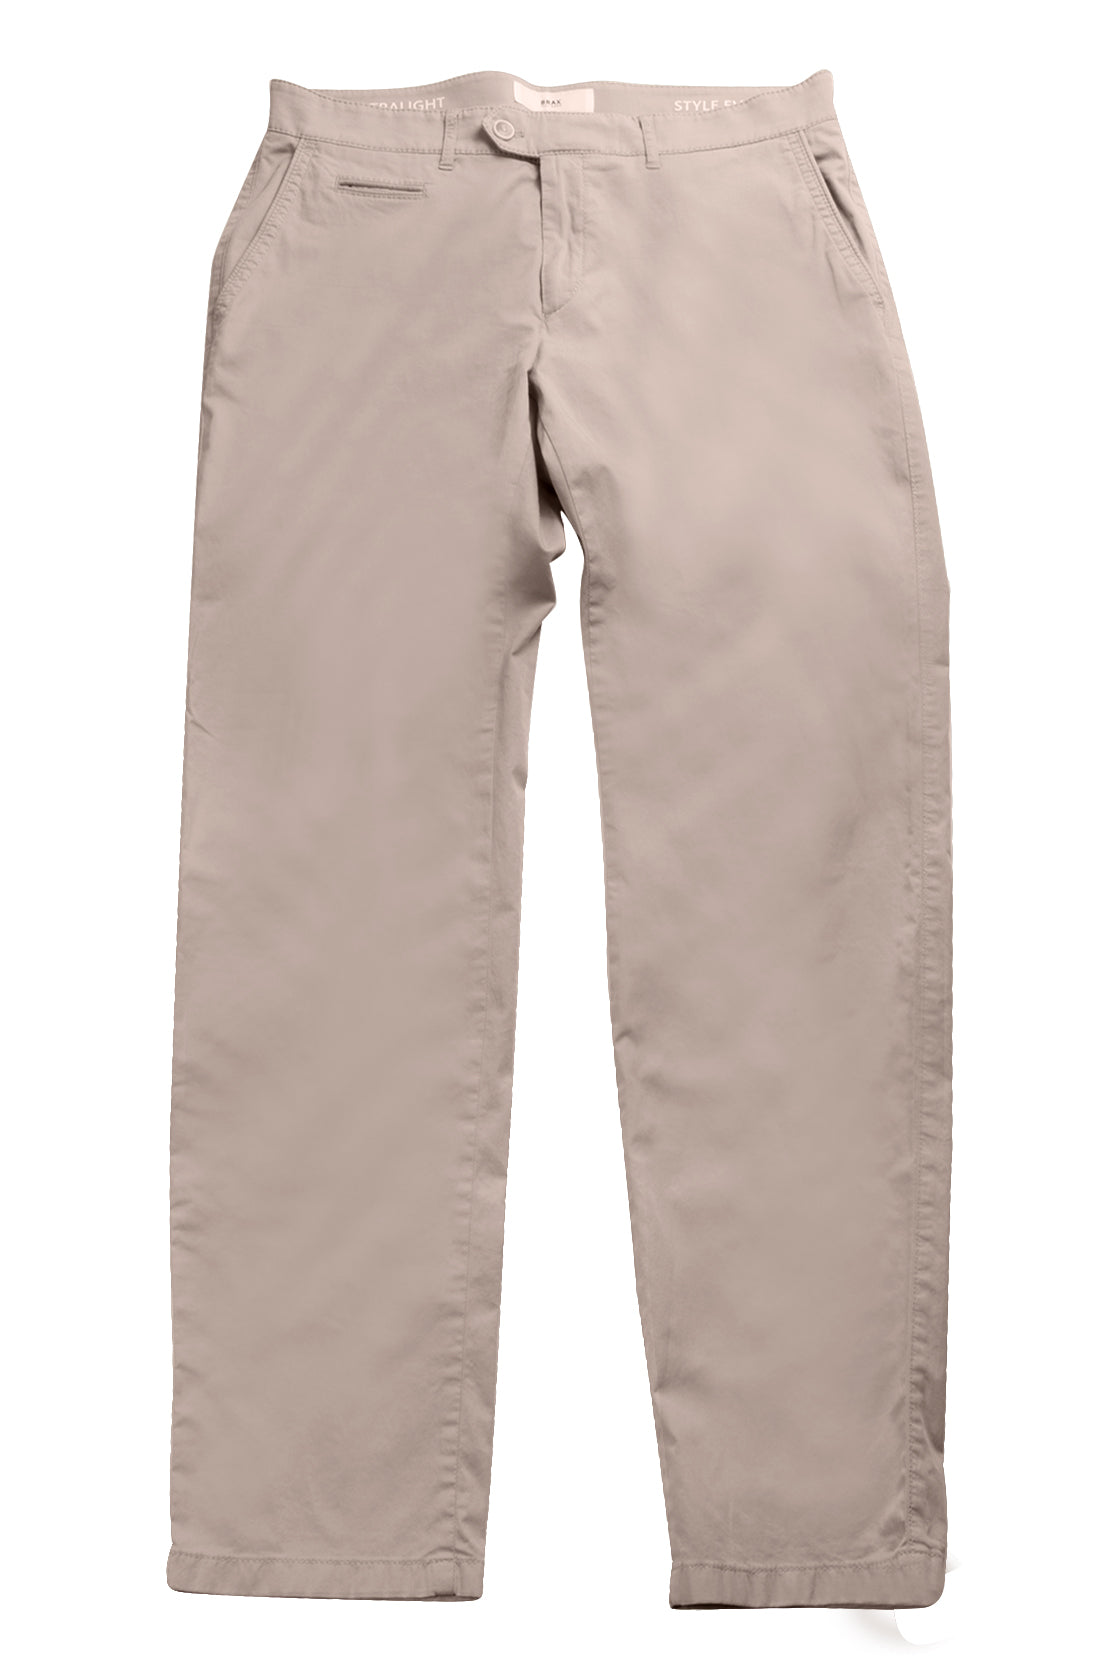 Brax Everest Cotton Trouser 32L Rye